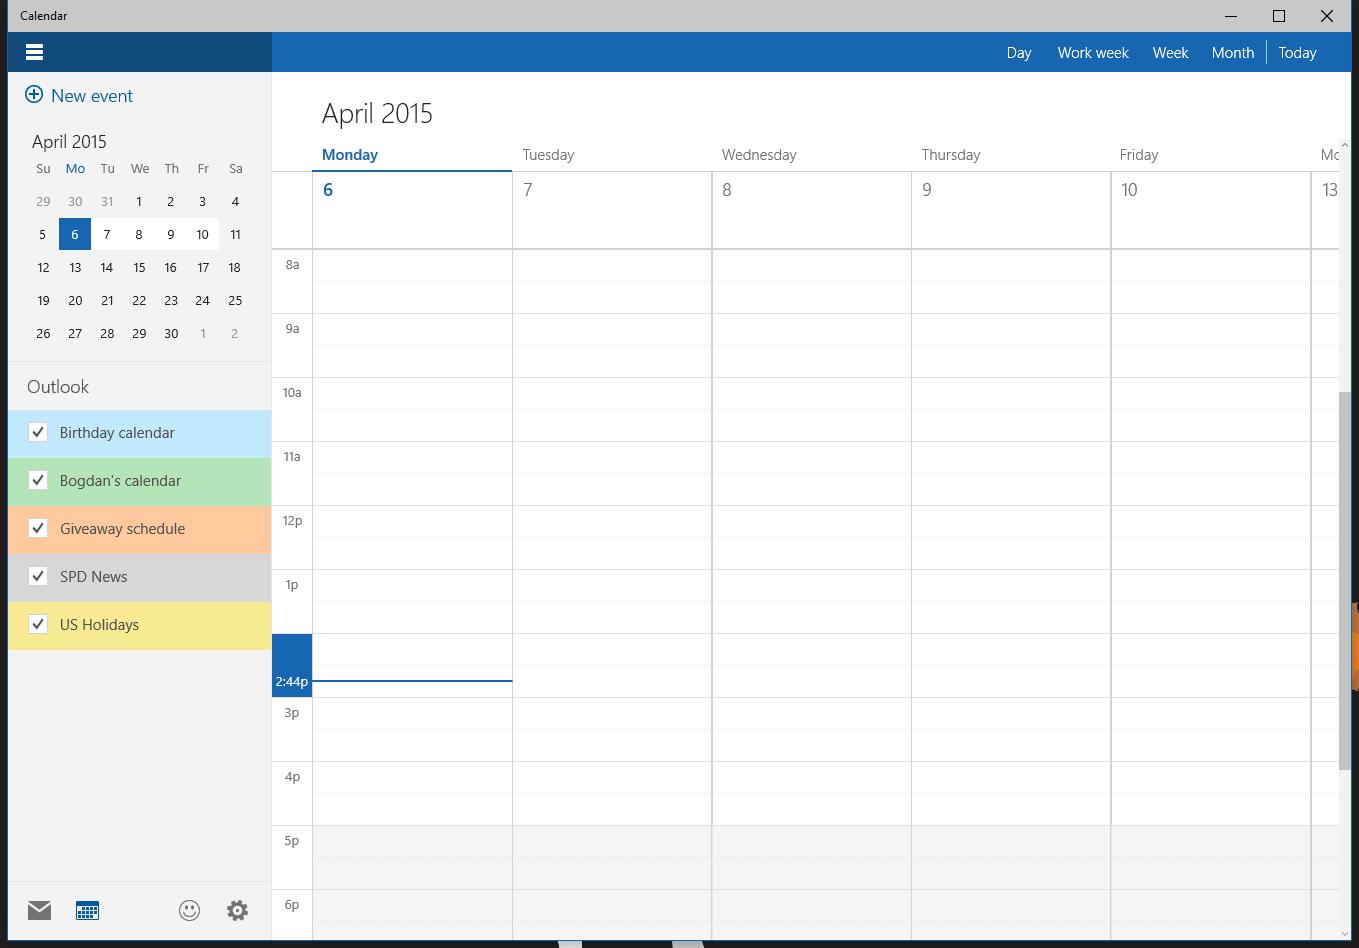 This Is the New Windows 10 Calendar App1359 x 948